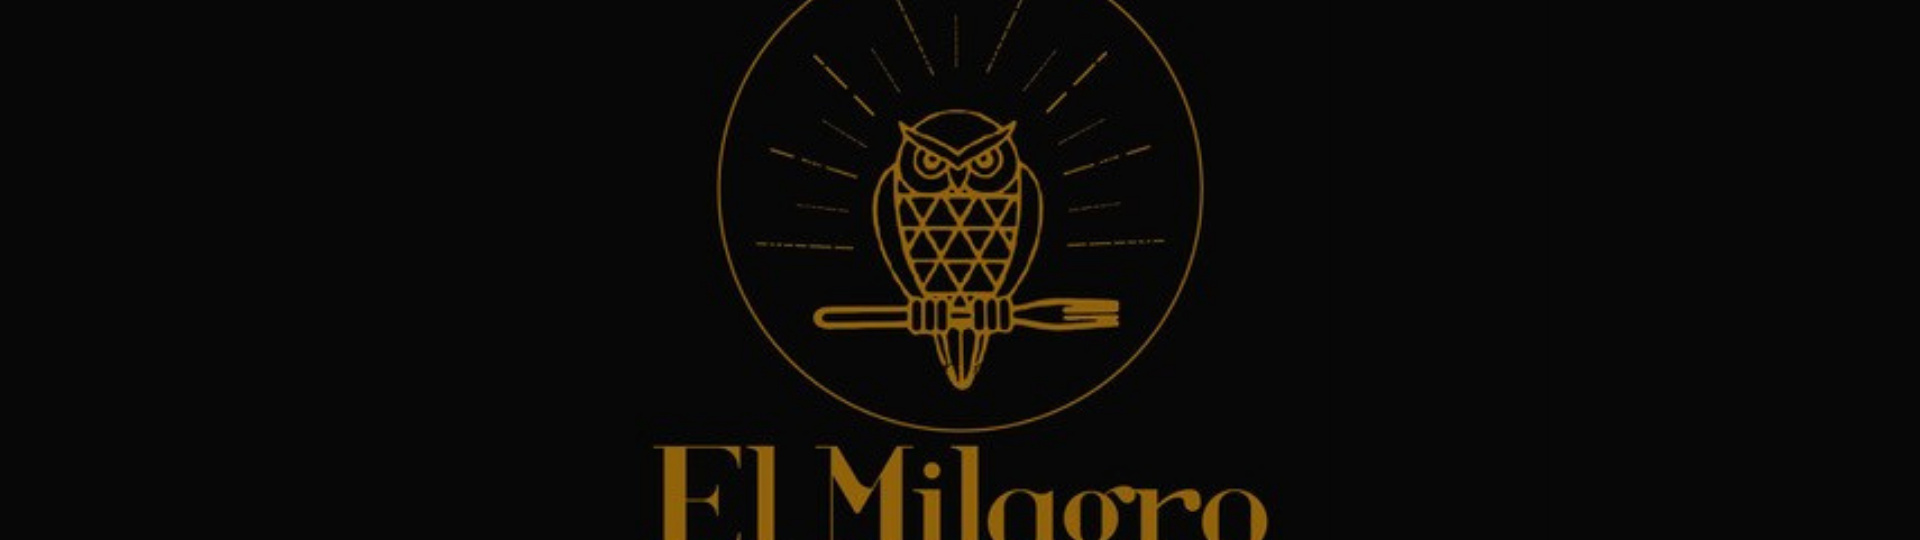 el milagro logo with owl sitting on fork